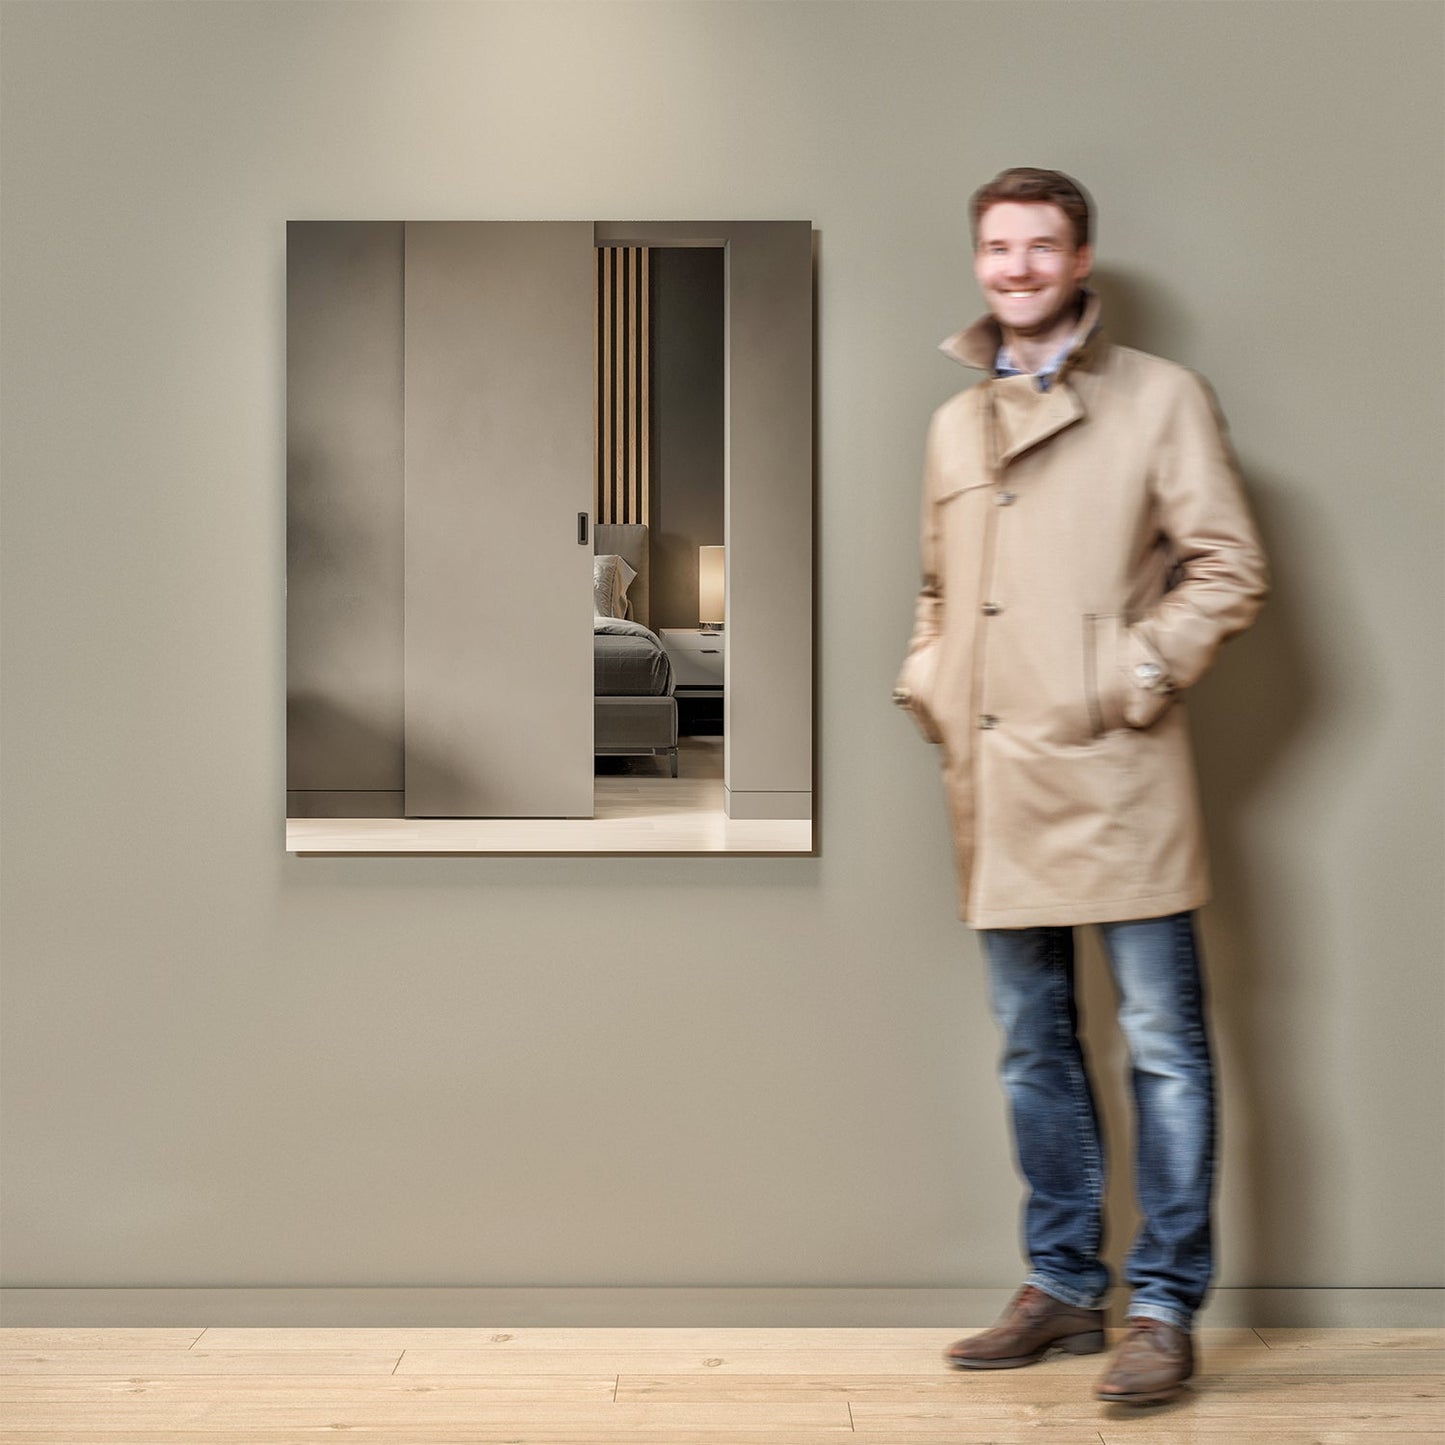 Eviva Sleek 36" Frameless Bathroom Wall Mirror